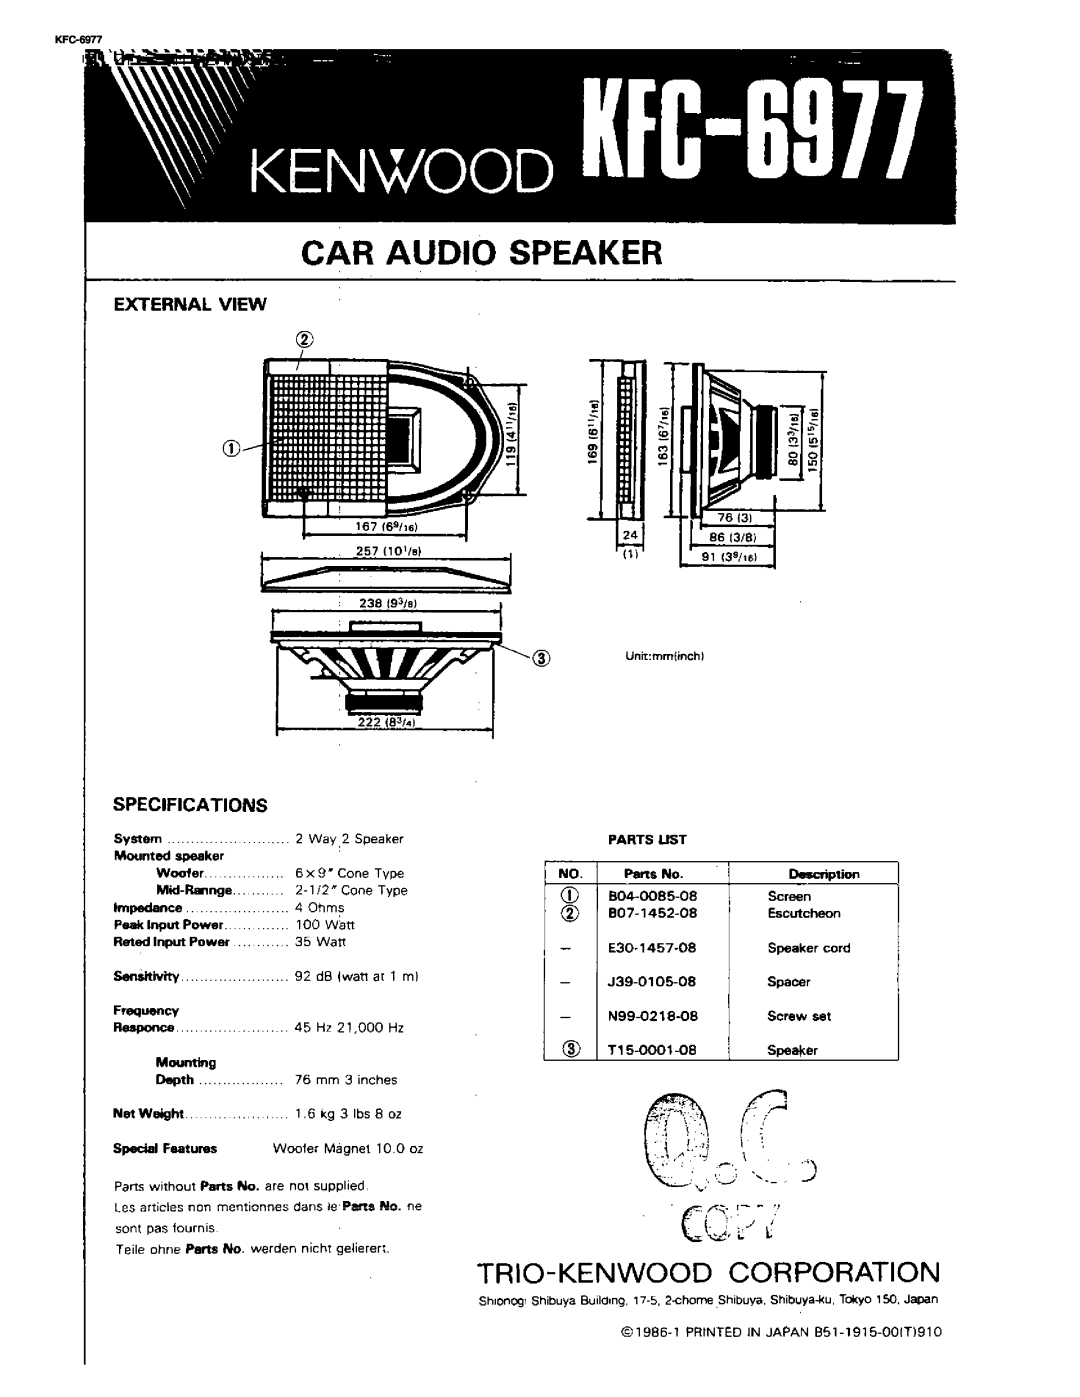 Kenwood KFC-6977 manual 